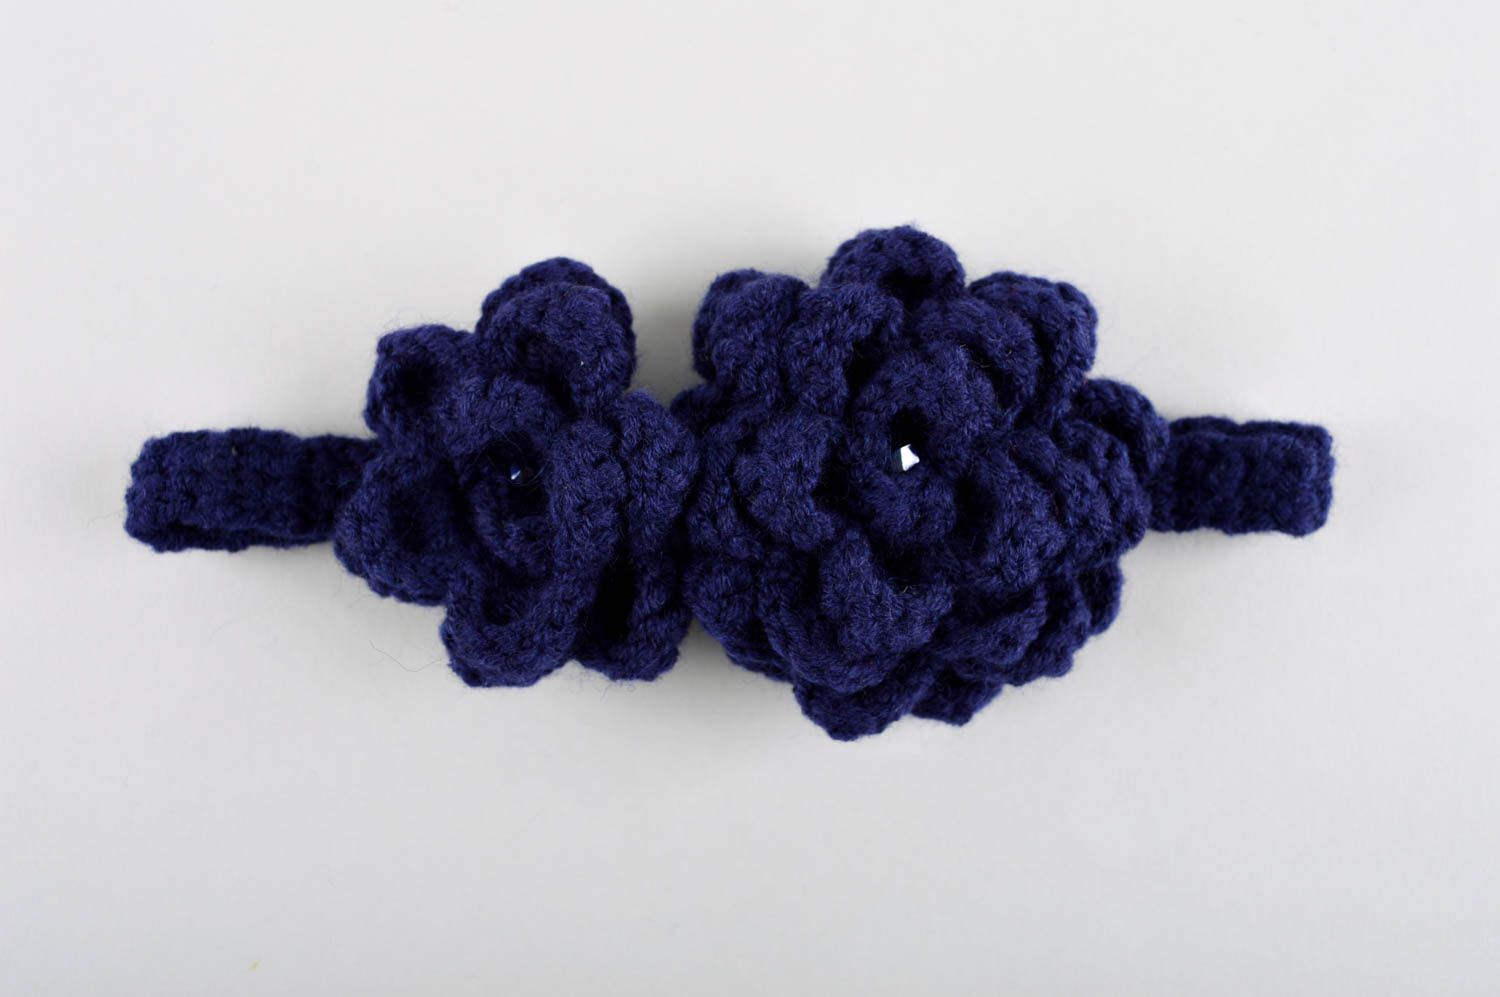 Handmade headband designer acessory gift ideas knitted hedband for girls photo 4